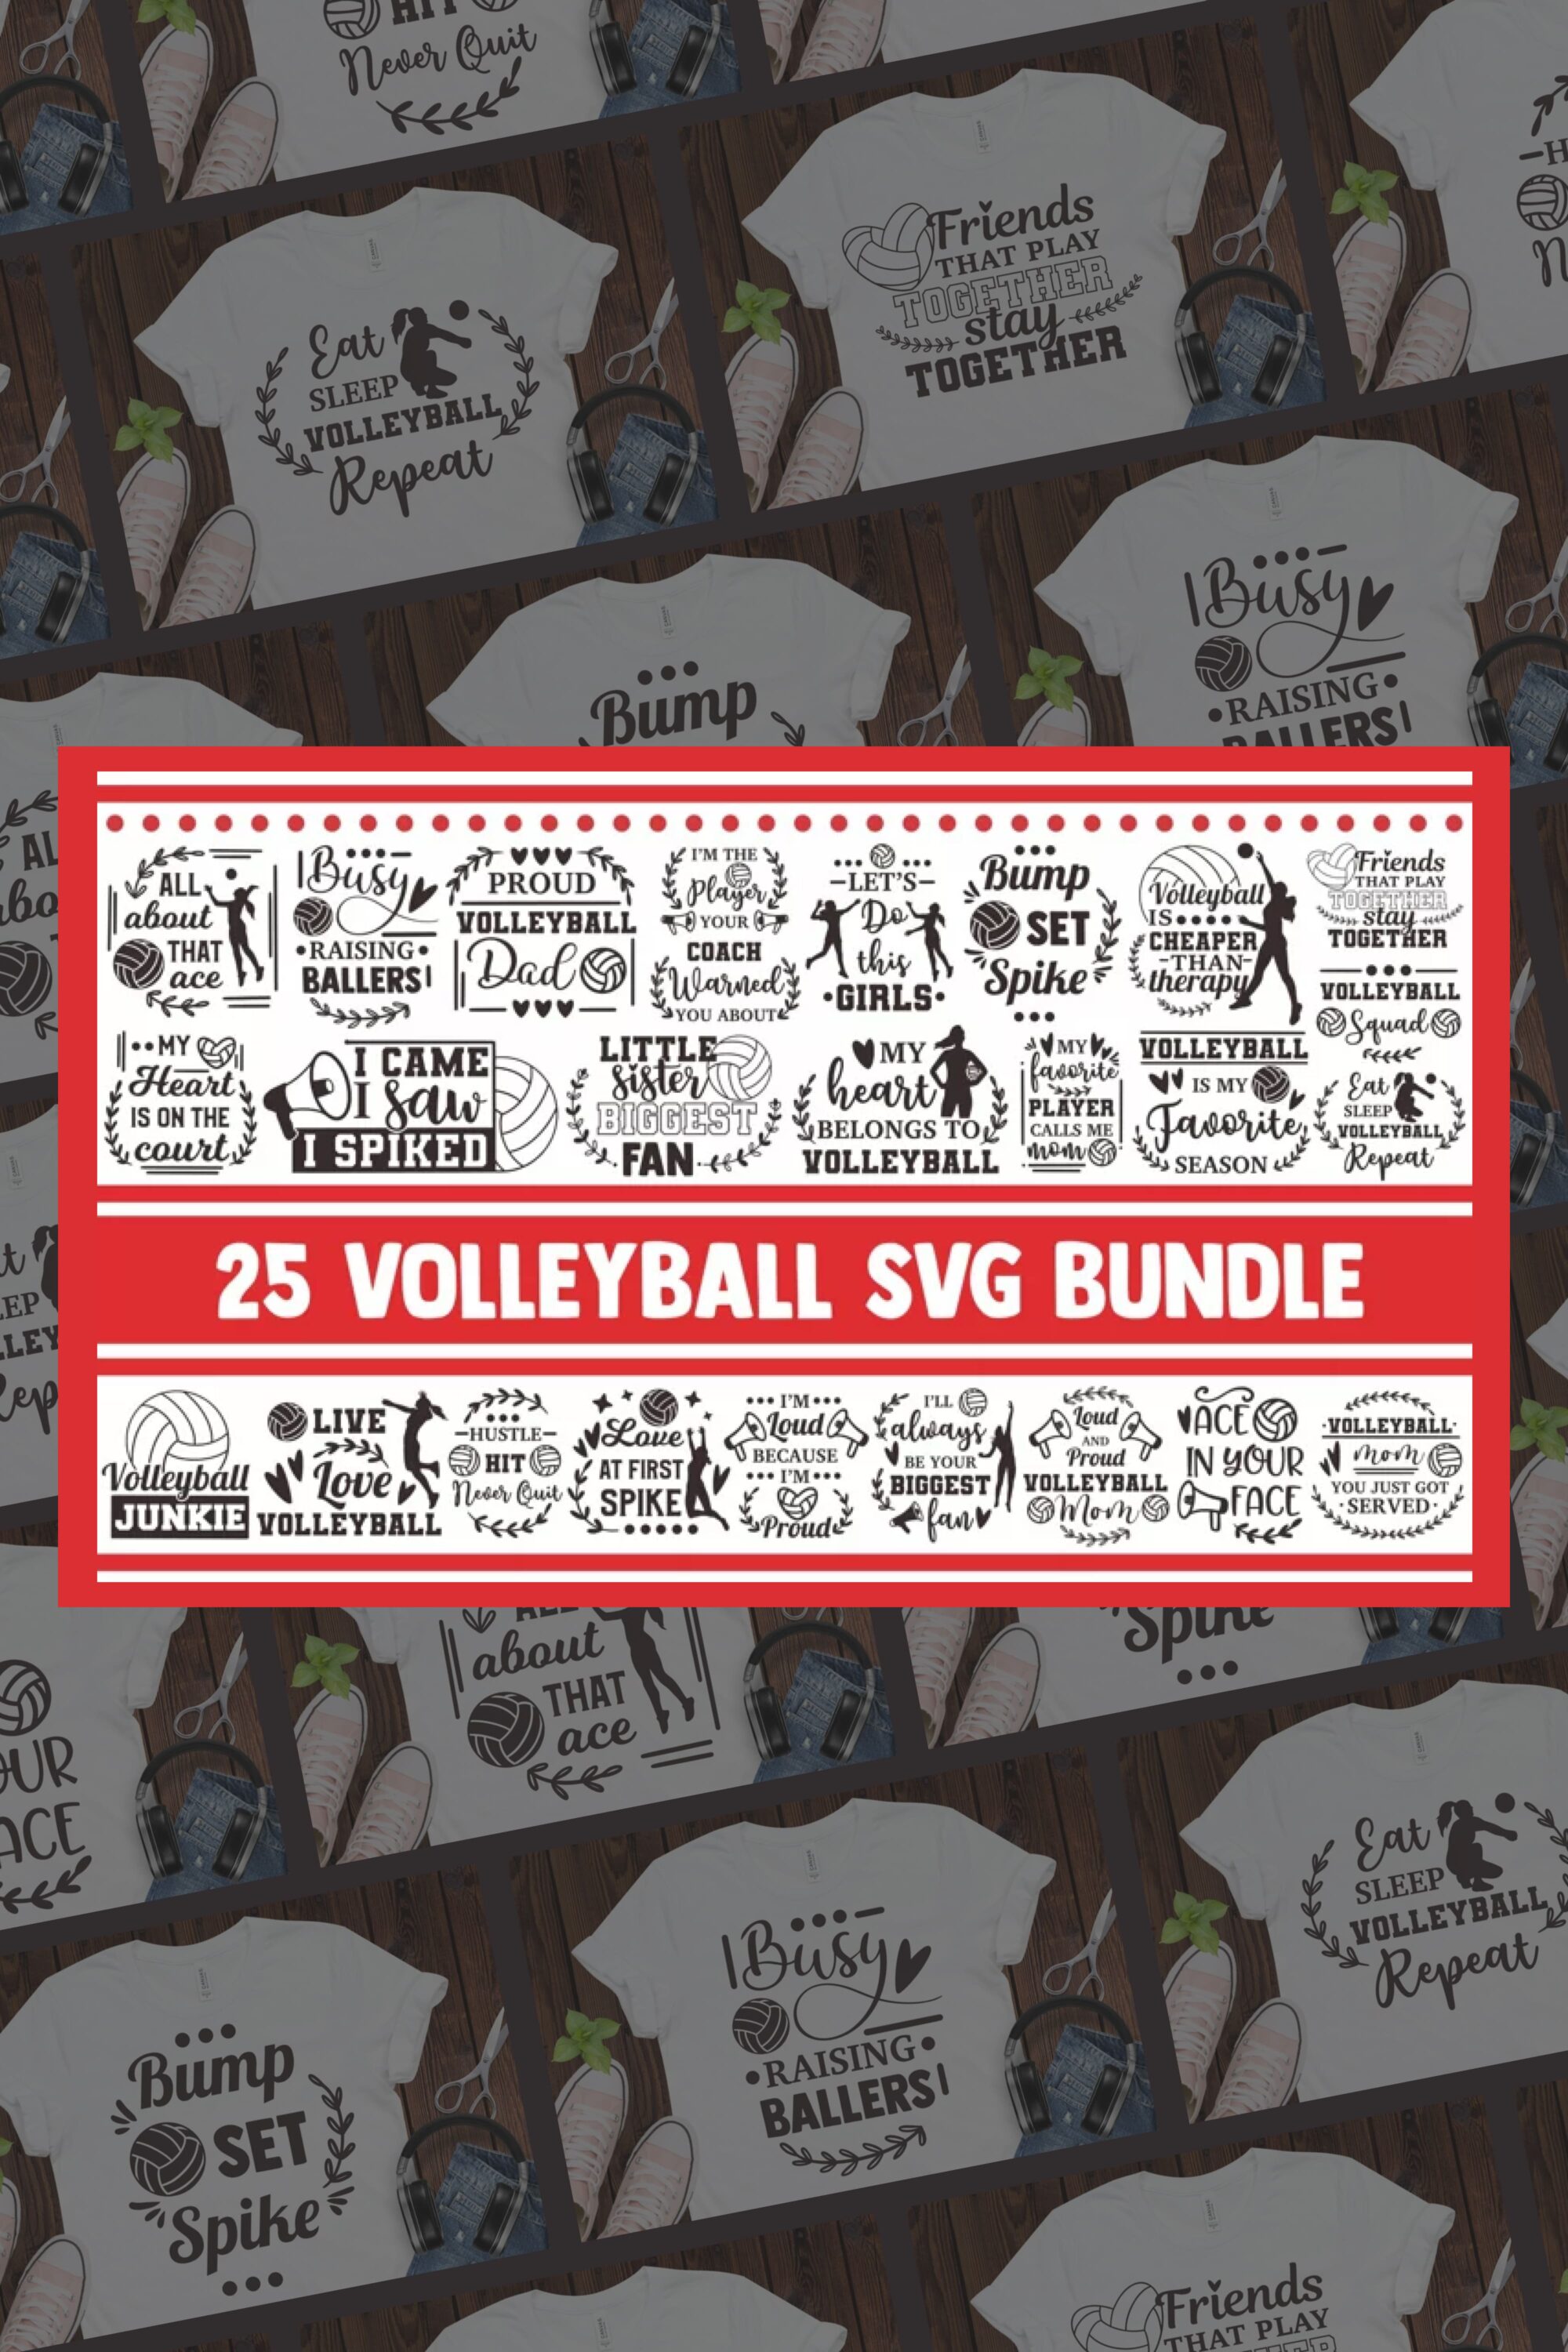 25 volleyball svg bundle.